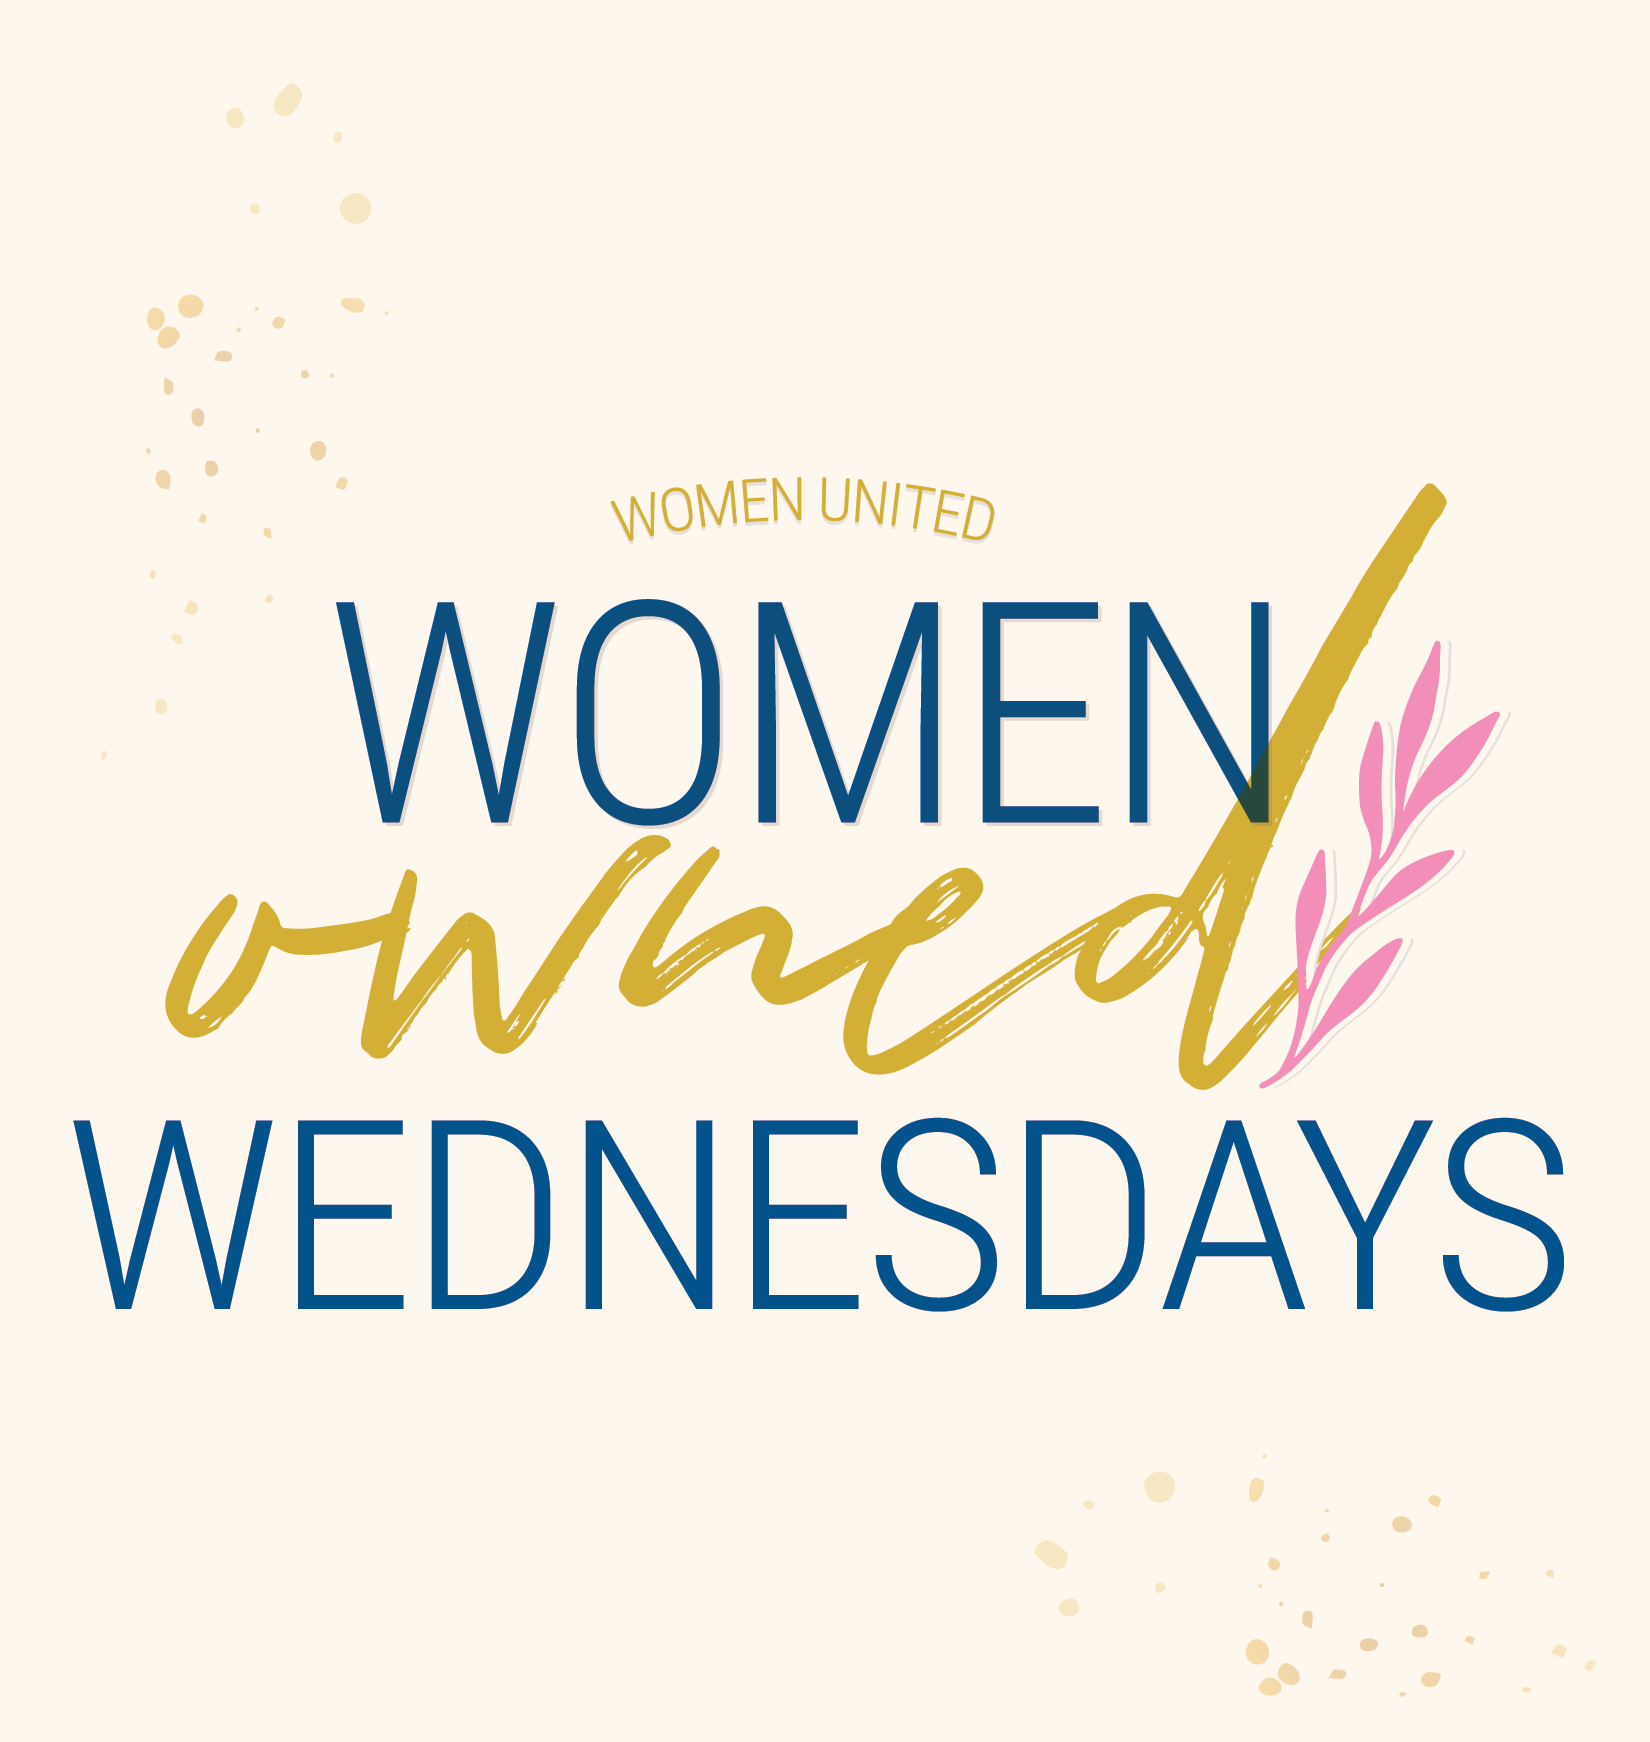 Women-Owned Wednesdays